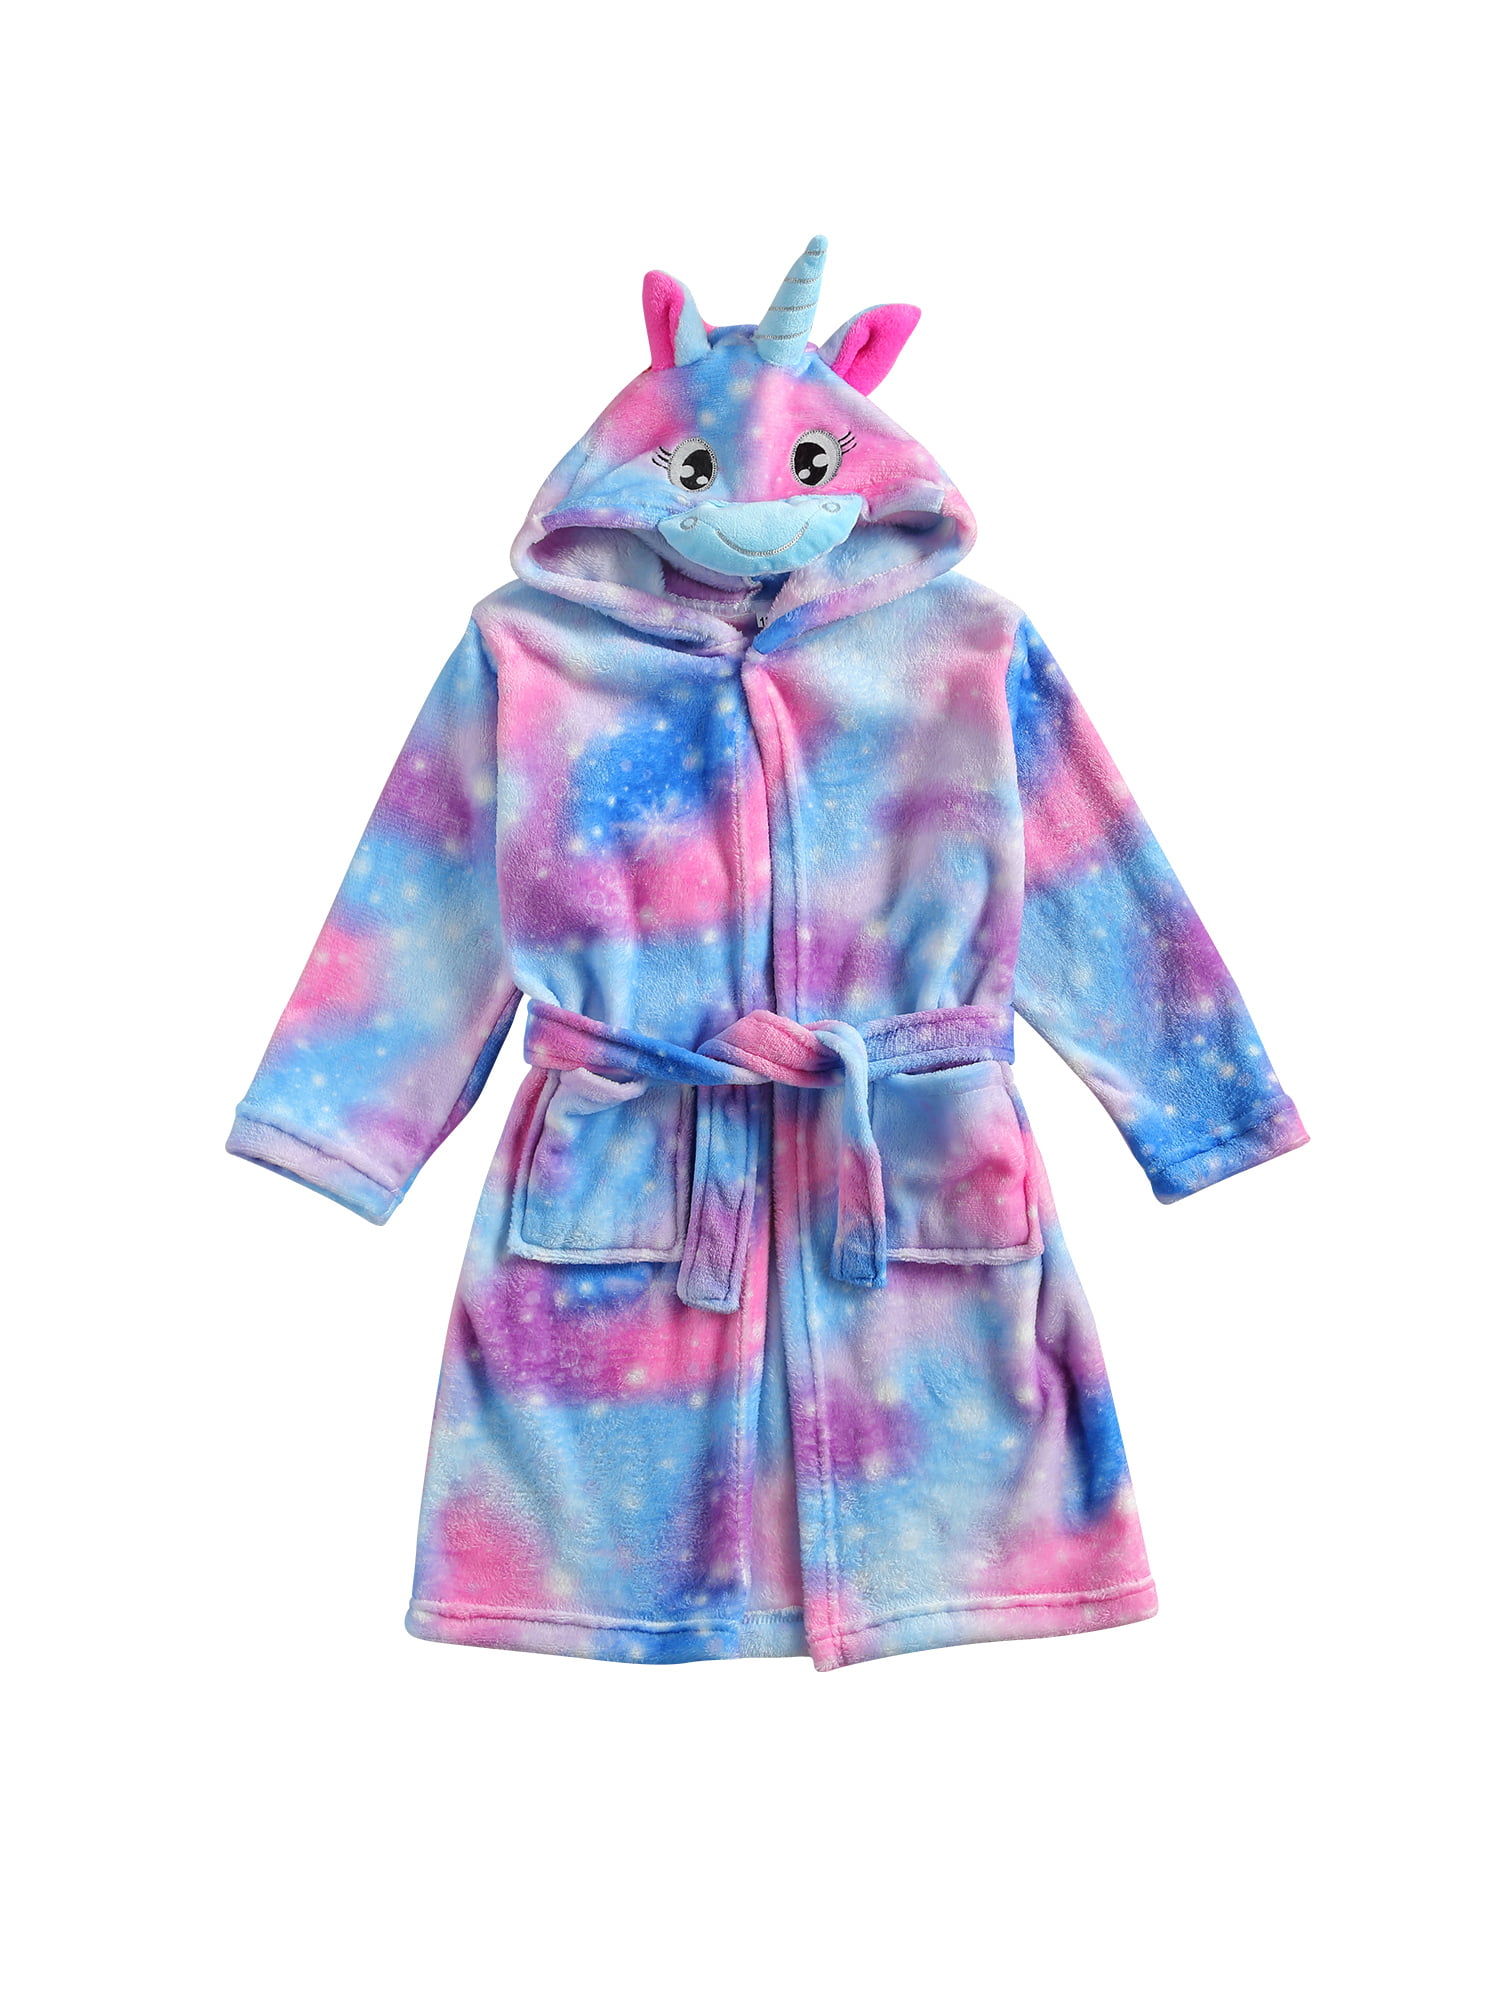 LPATTERN Baby/Toddler/Kids Unisex Boys Girls Soft Flannel Bathrobe Hooded Dressing Gown Cute Animal Sleepwear & Robes 